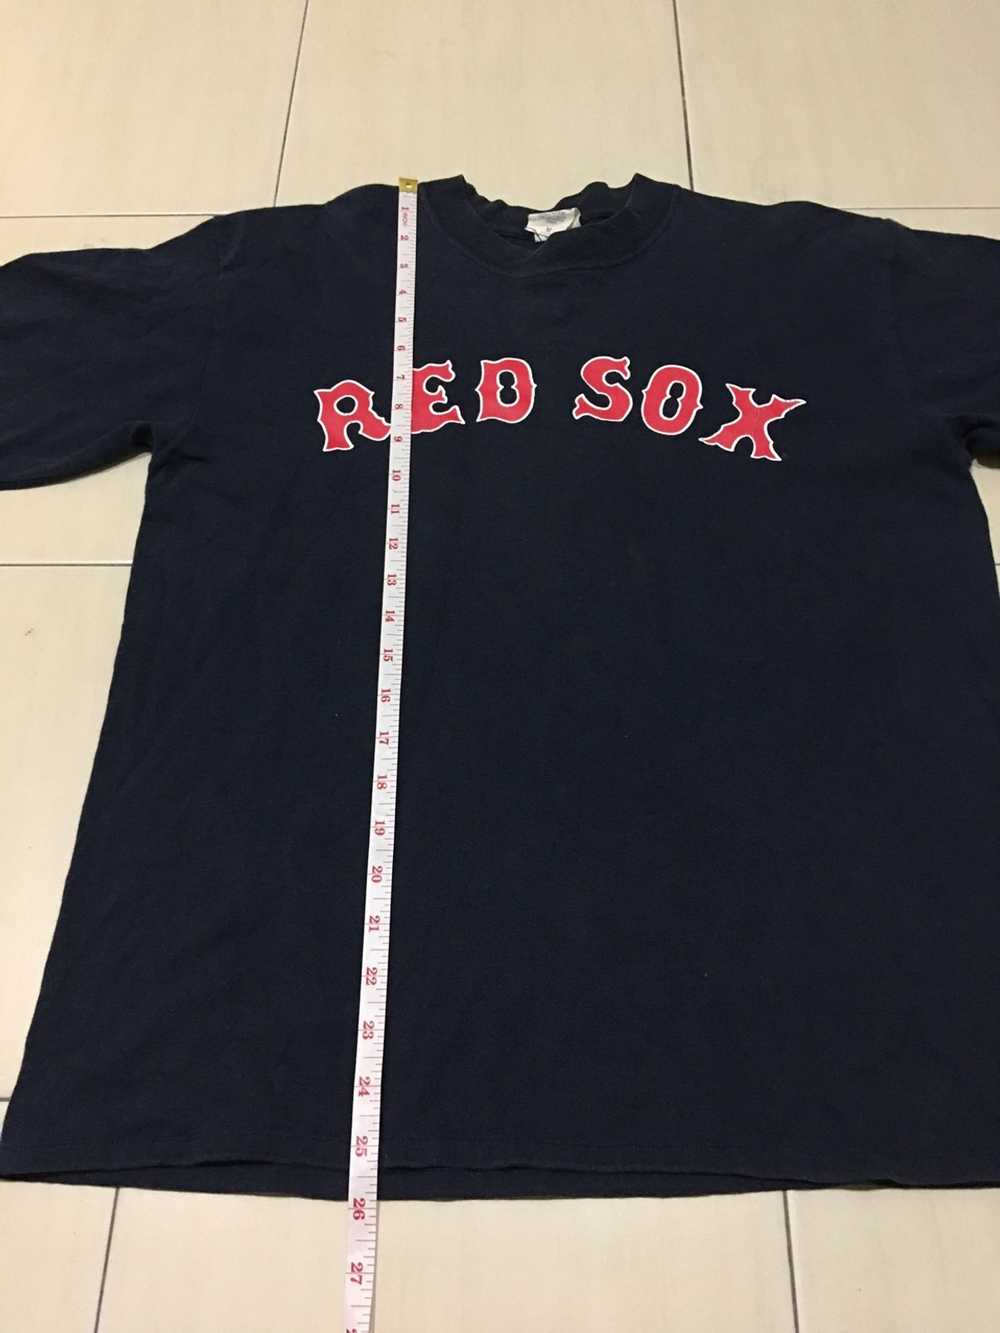 Majestic, Shirts, Vintage Boston Red Sox Tiedye Shirt